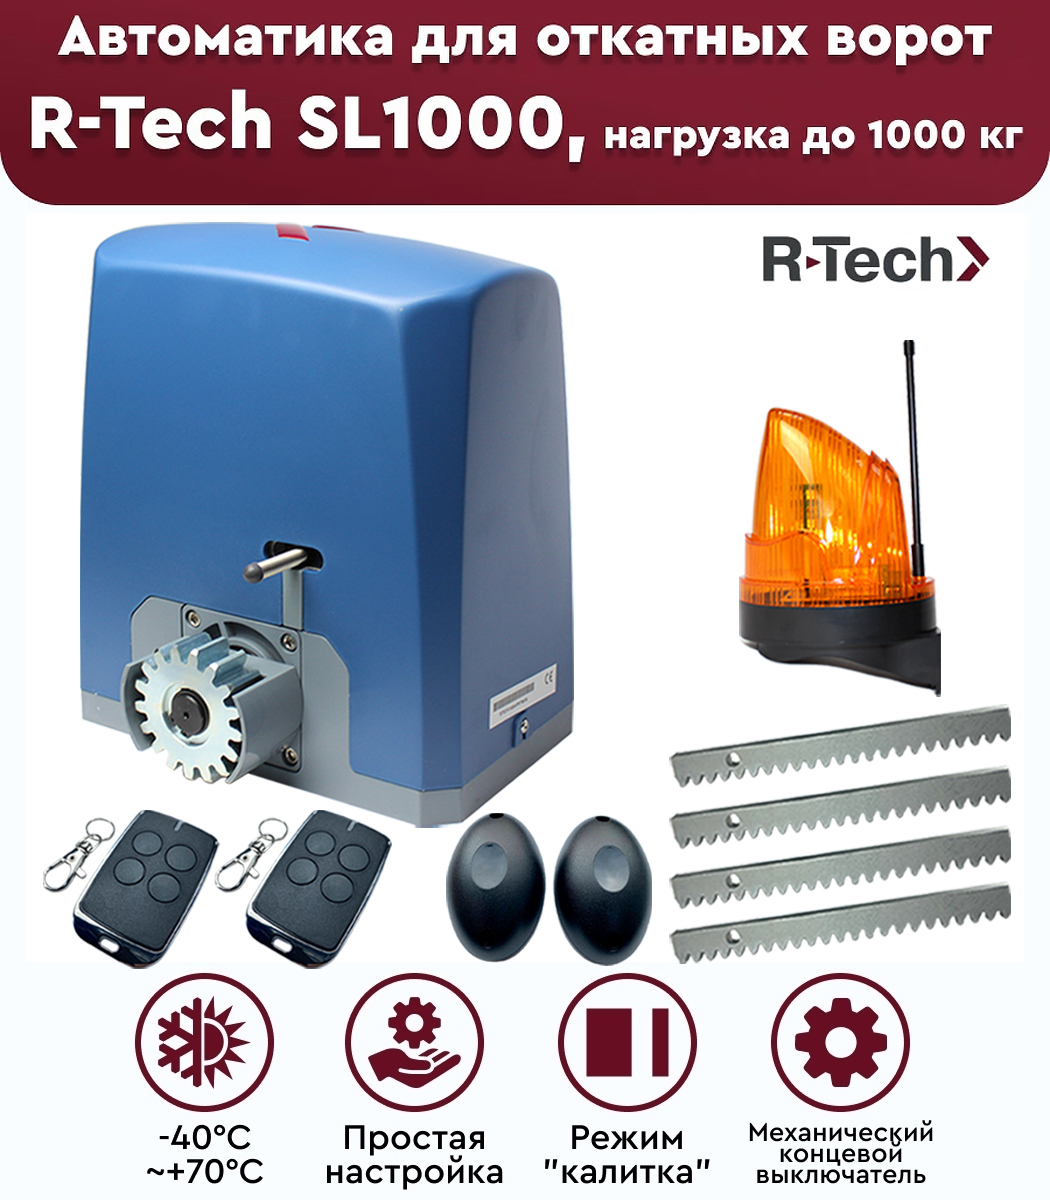 R-Tech SL1000 АС FULL автоматика для откатных ворот